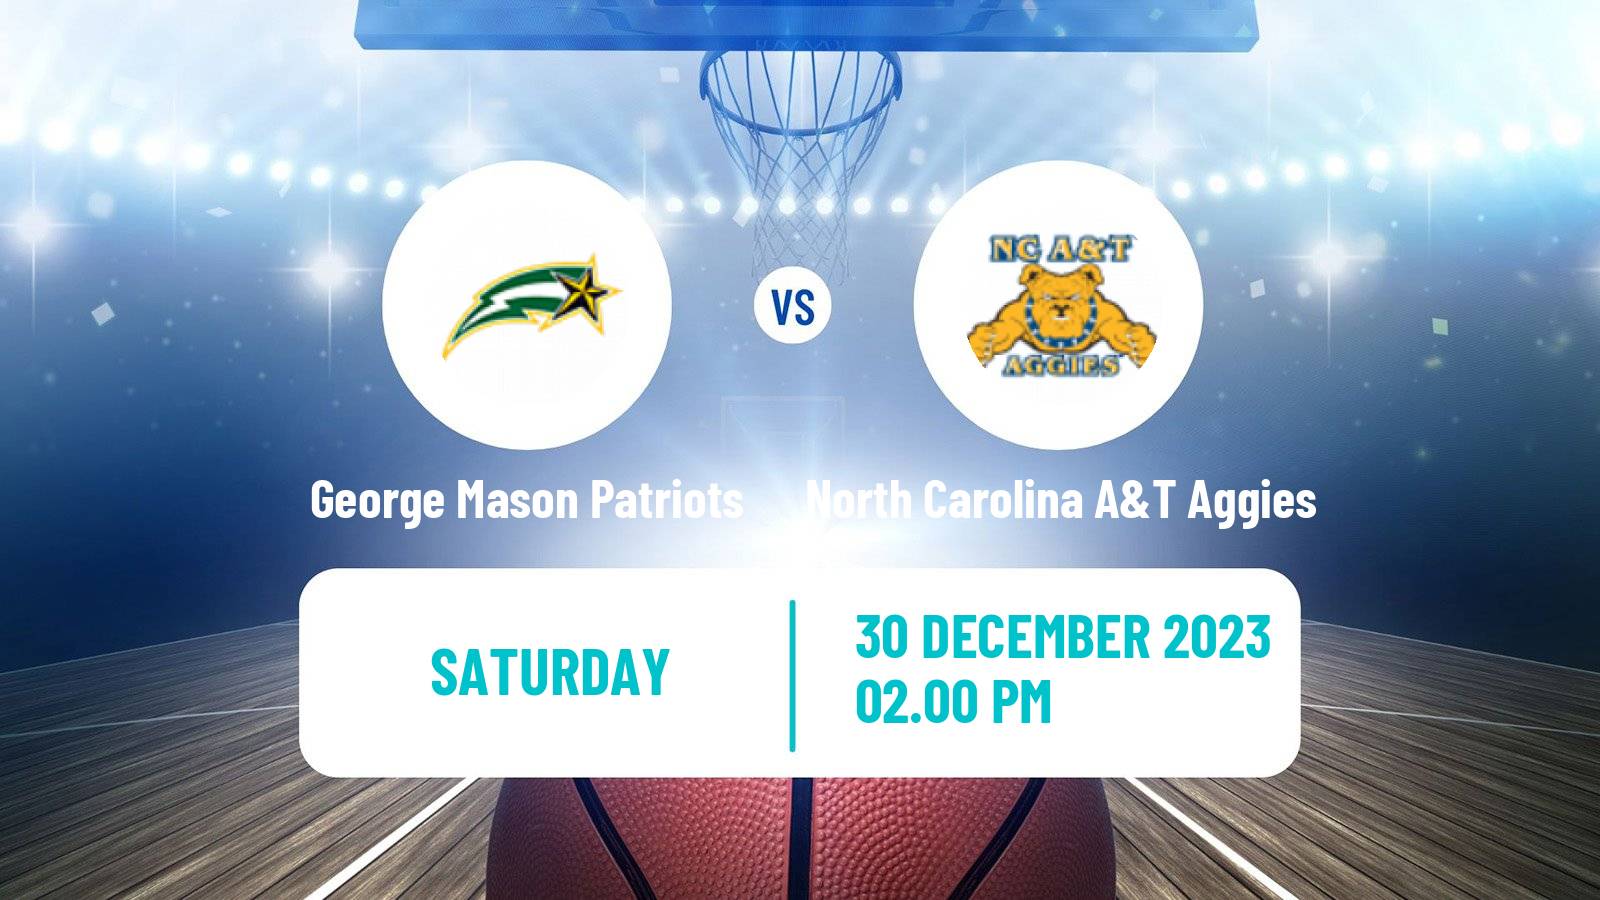 Basketball NCAA College Basketball George Mason Patriots - North Carolina A&T Aggies